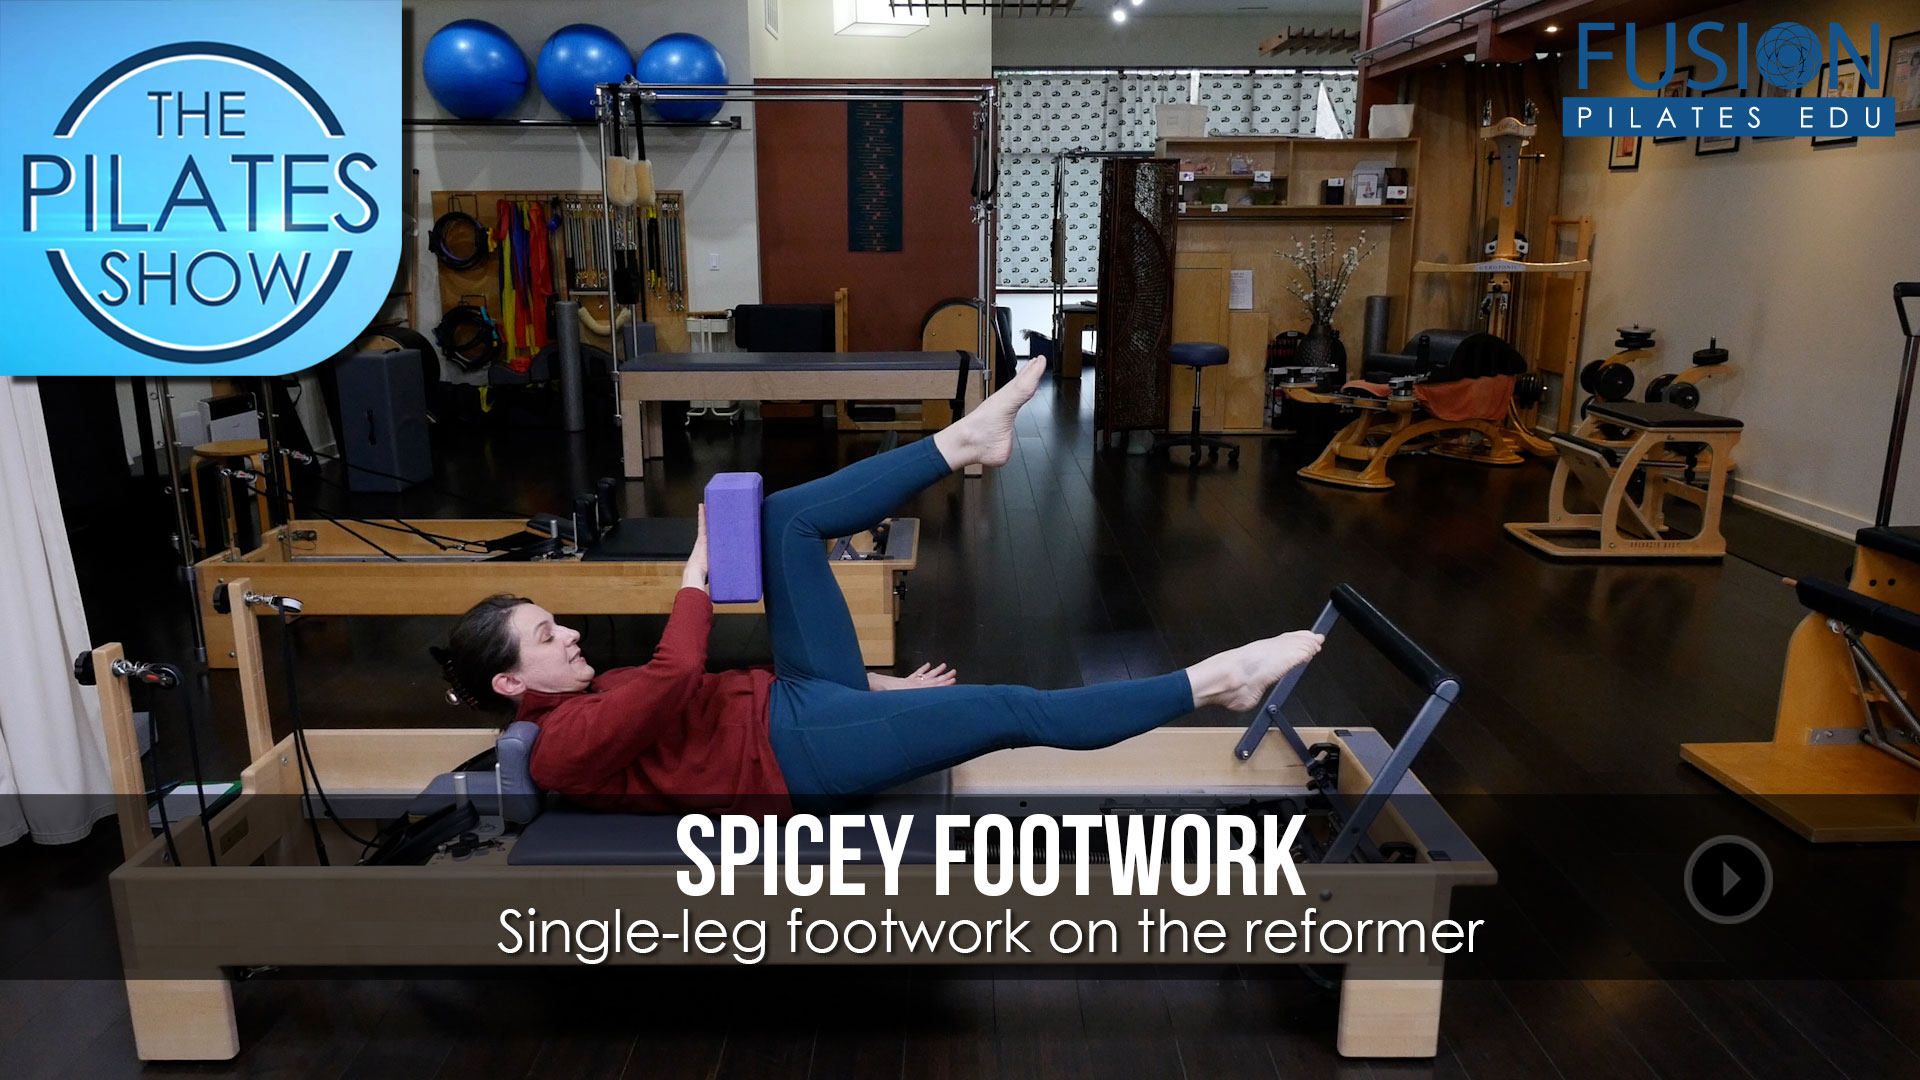 Spicey Footwork: Single-leg footwork on the reformer